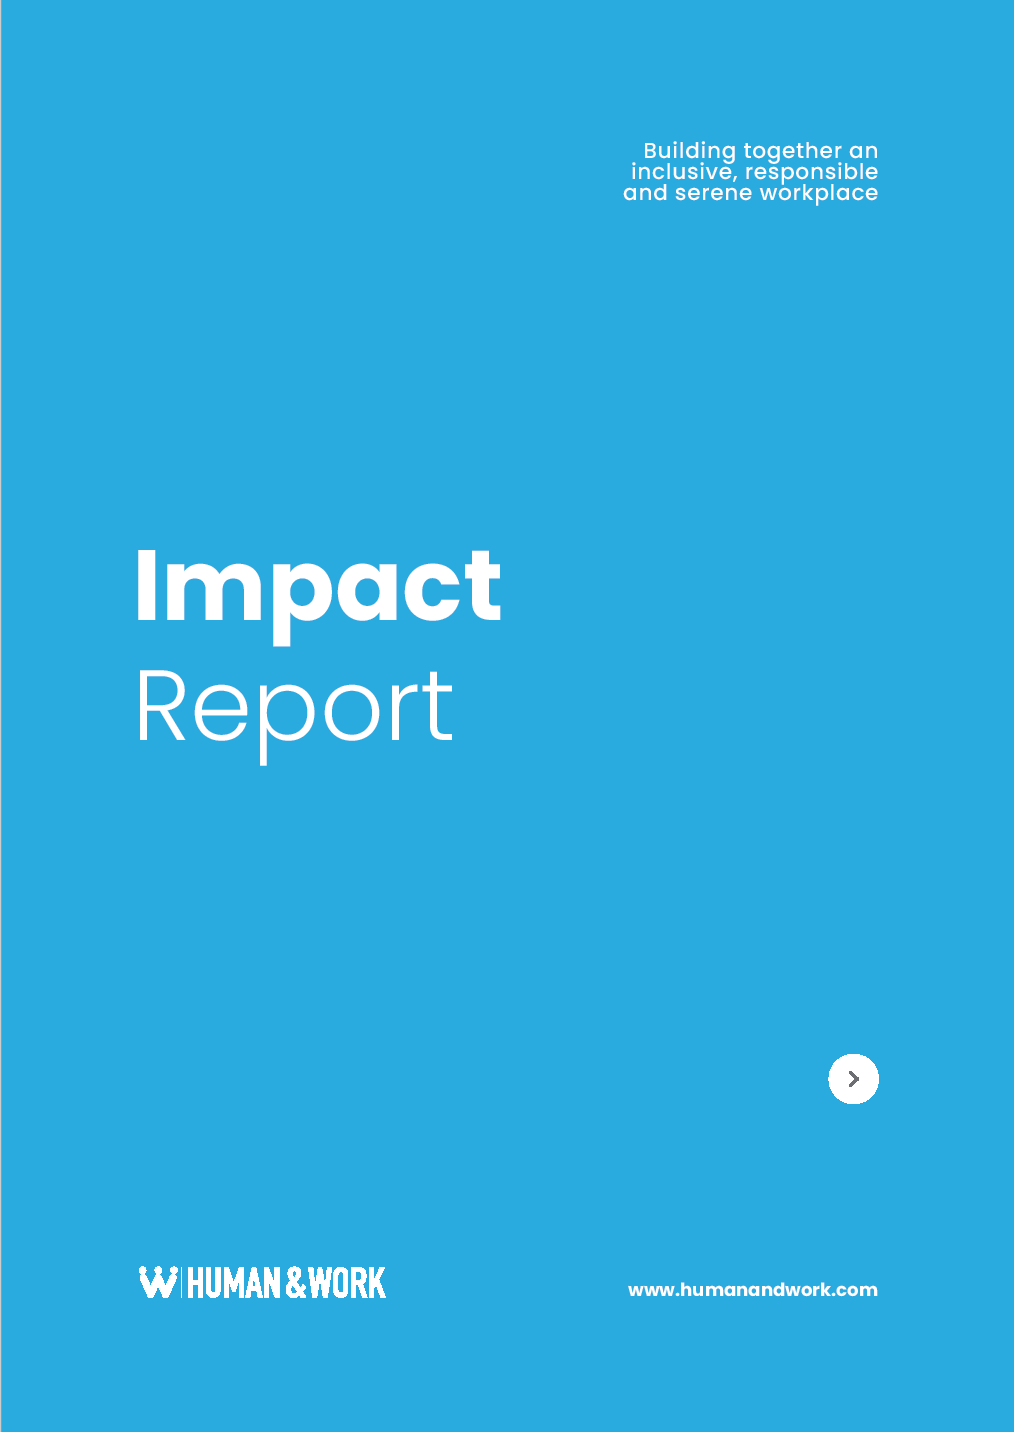 Image Impact Report